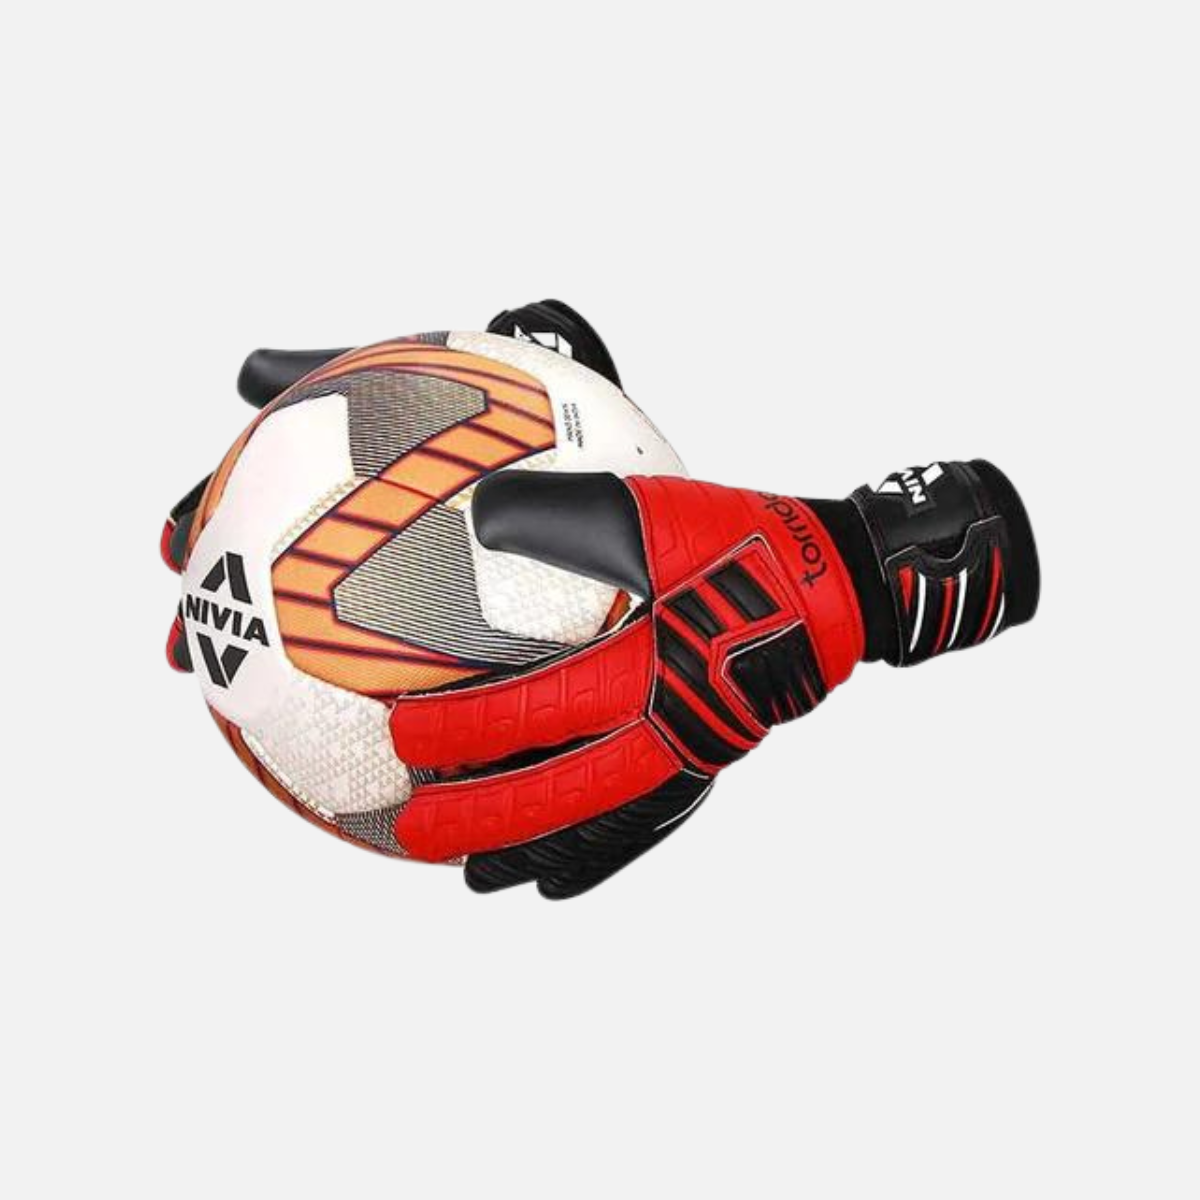 Nivia Raptor Torrido Goal Keeper Gloves -Red/Black